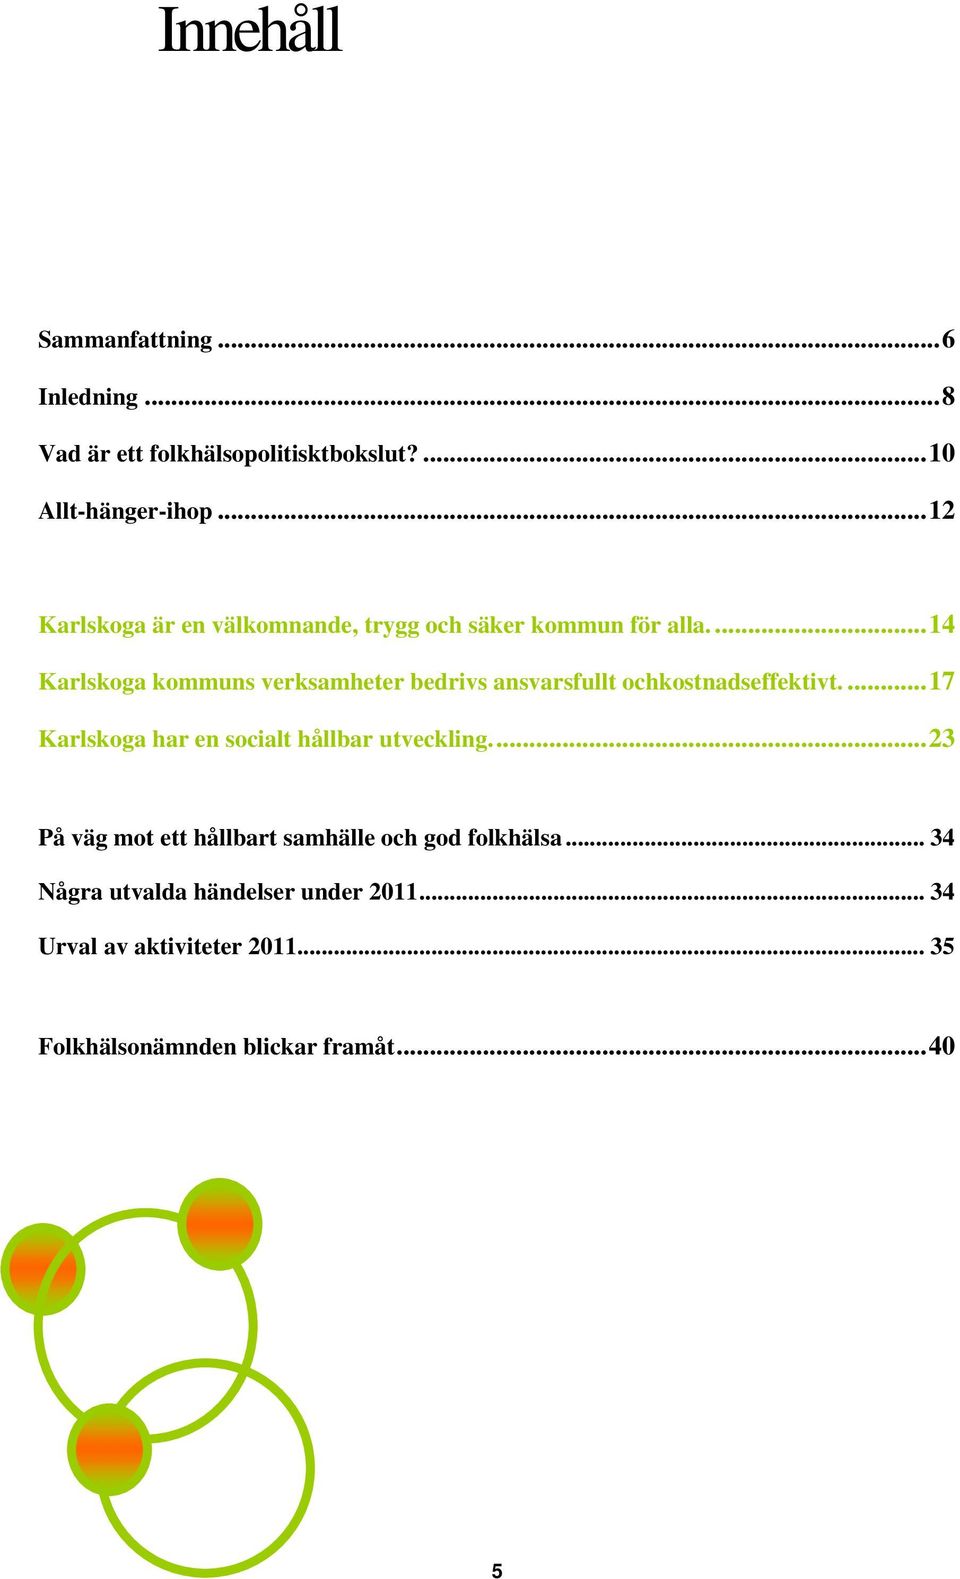 ..14 Karlskoga kommuns verksamheter bedrivs ansvarsfullt ochkostnadseffektivt.